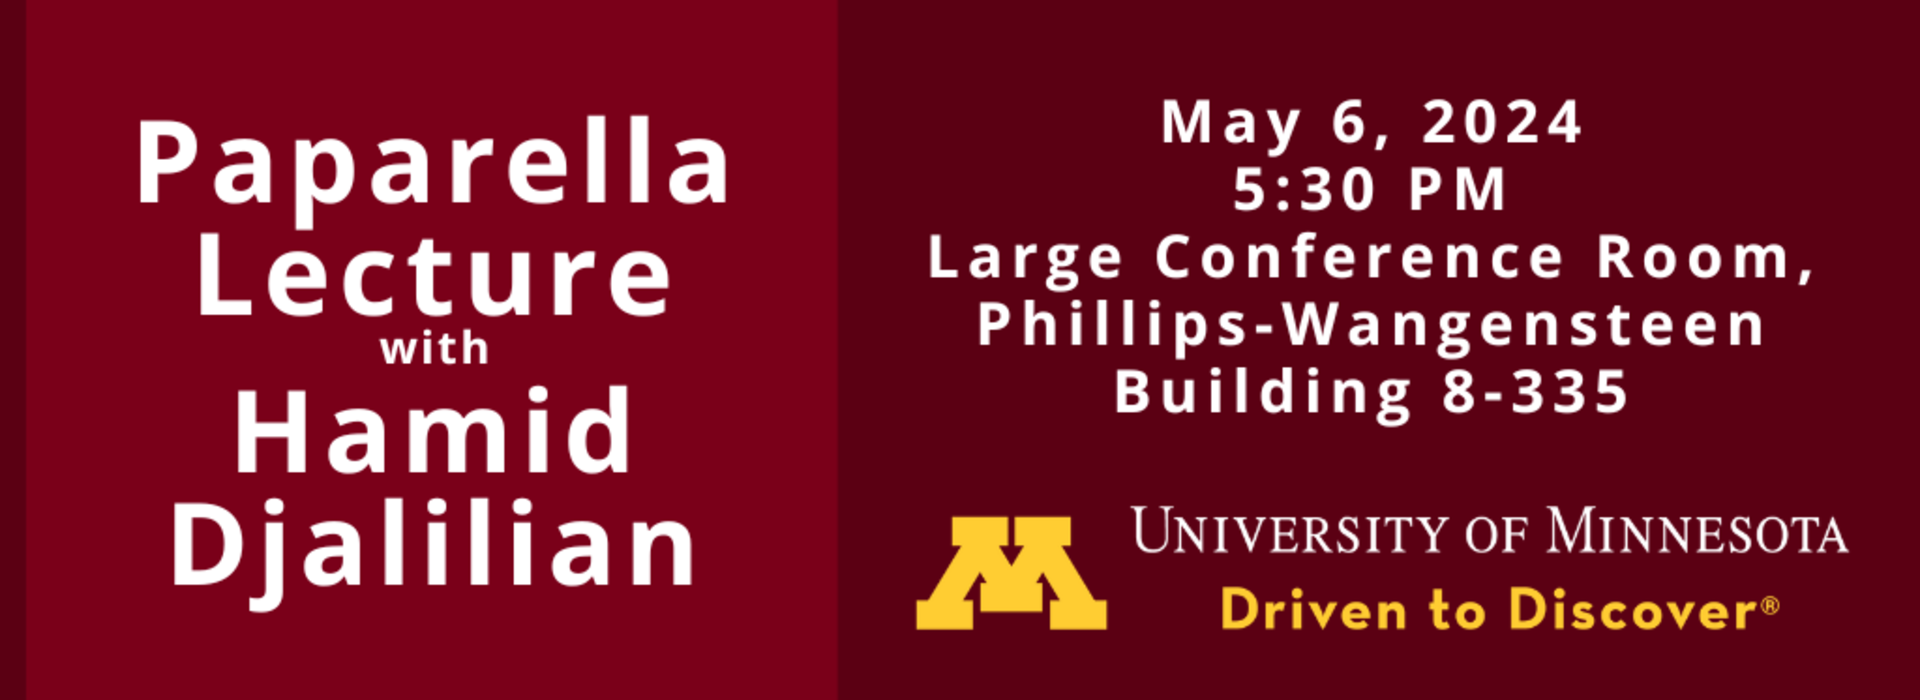 Paparella Lecture with Hamid Djalilian on May 6, 2024 at 5:30 PM